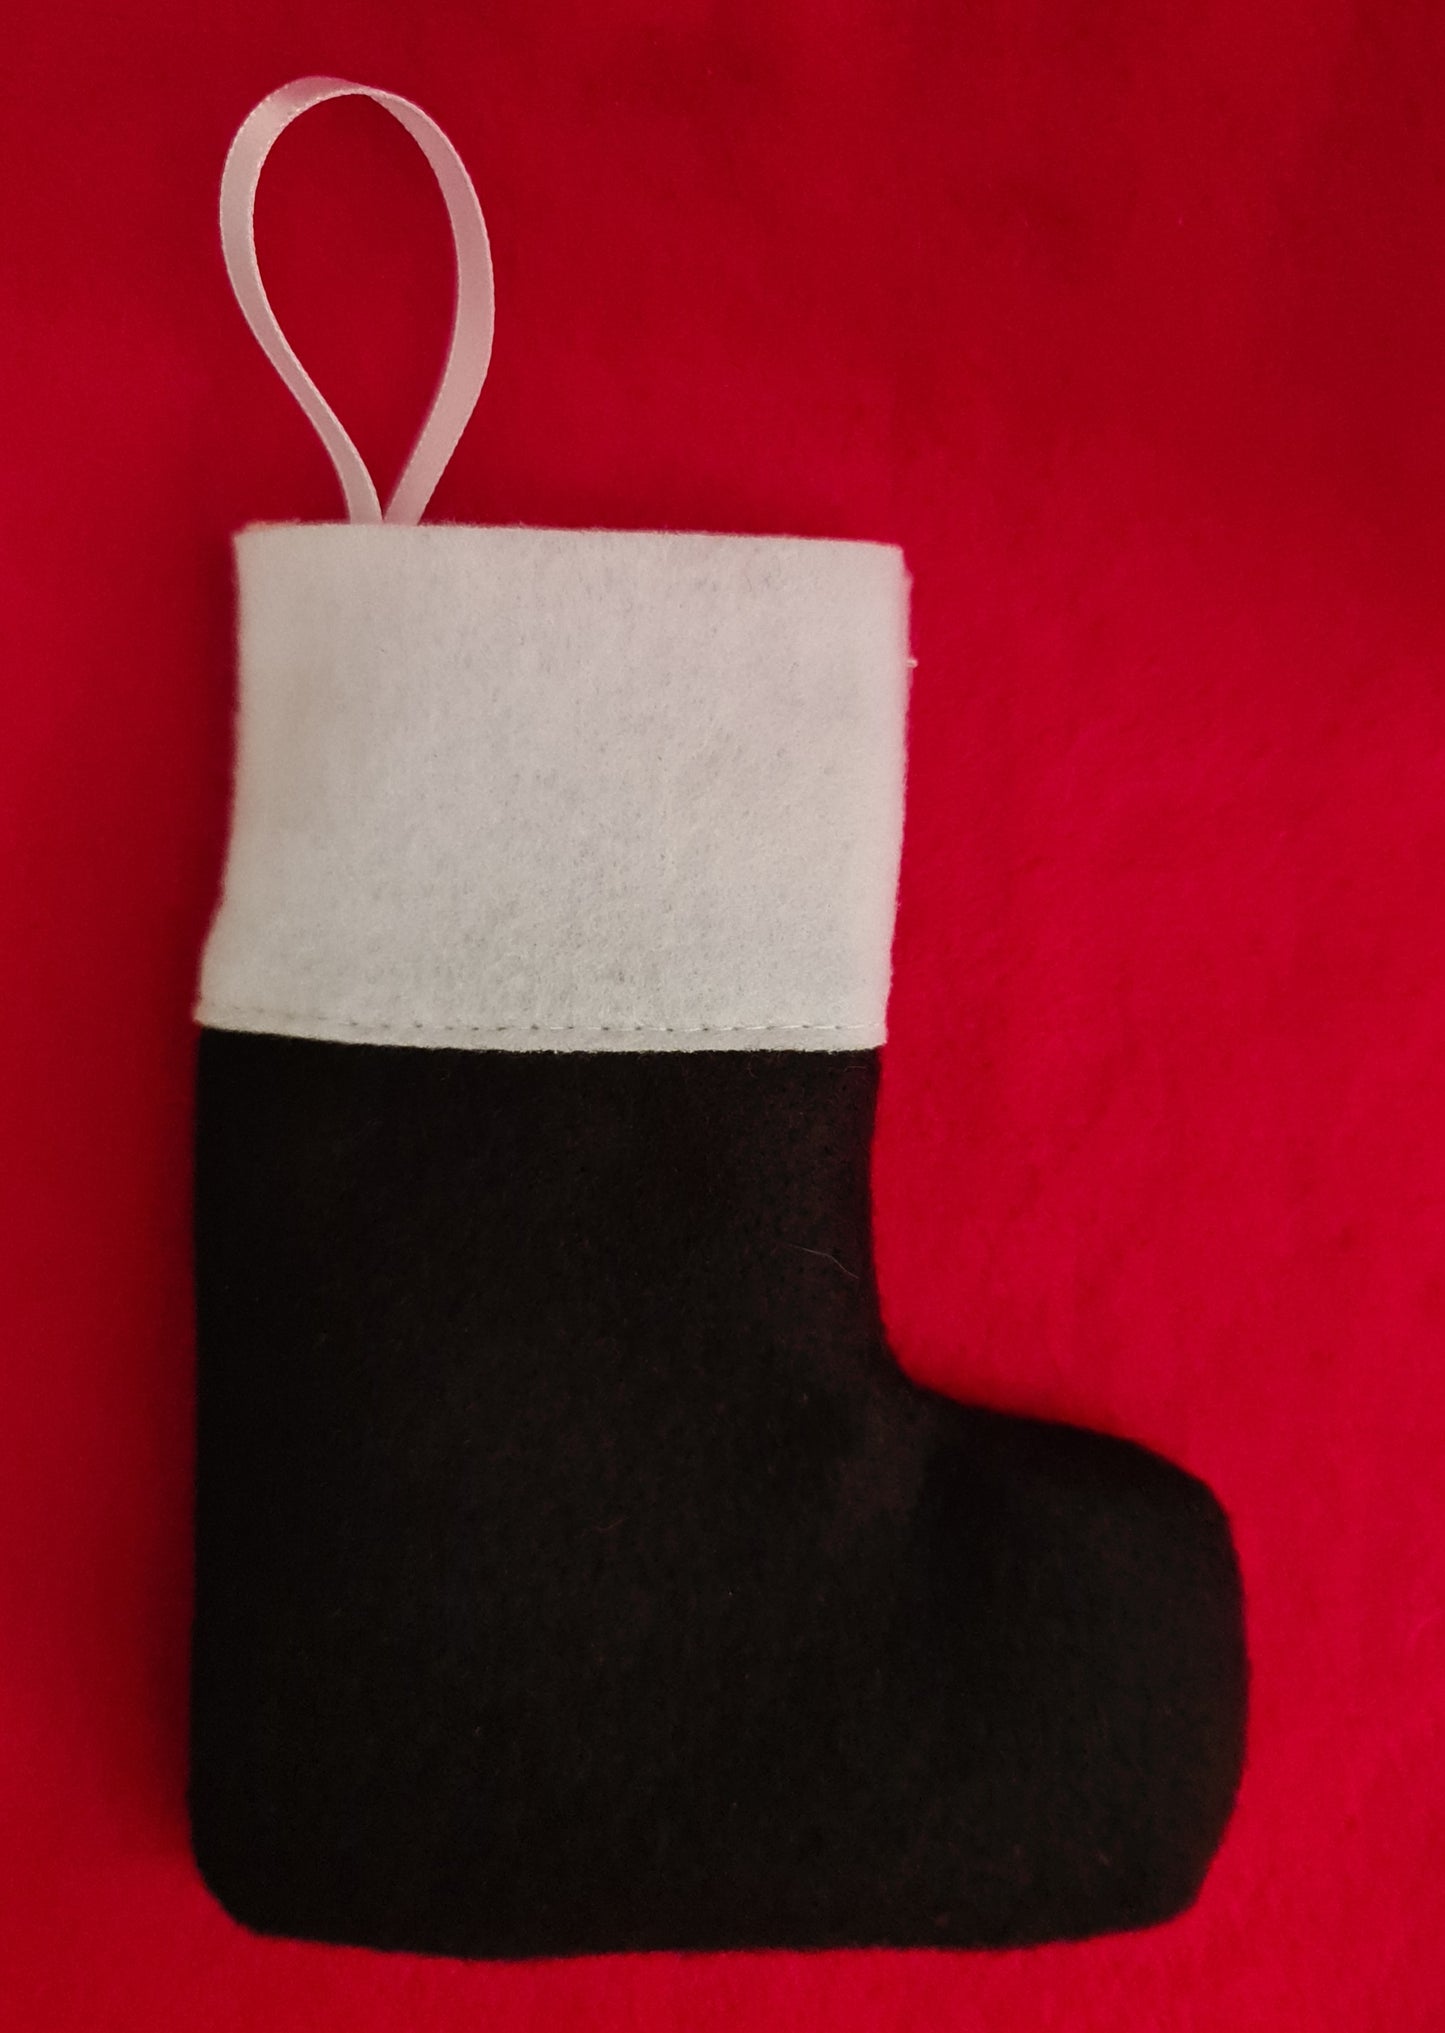 Personalised miniature Christmas stocking - black and white